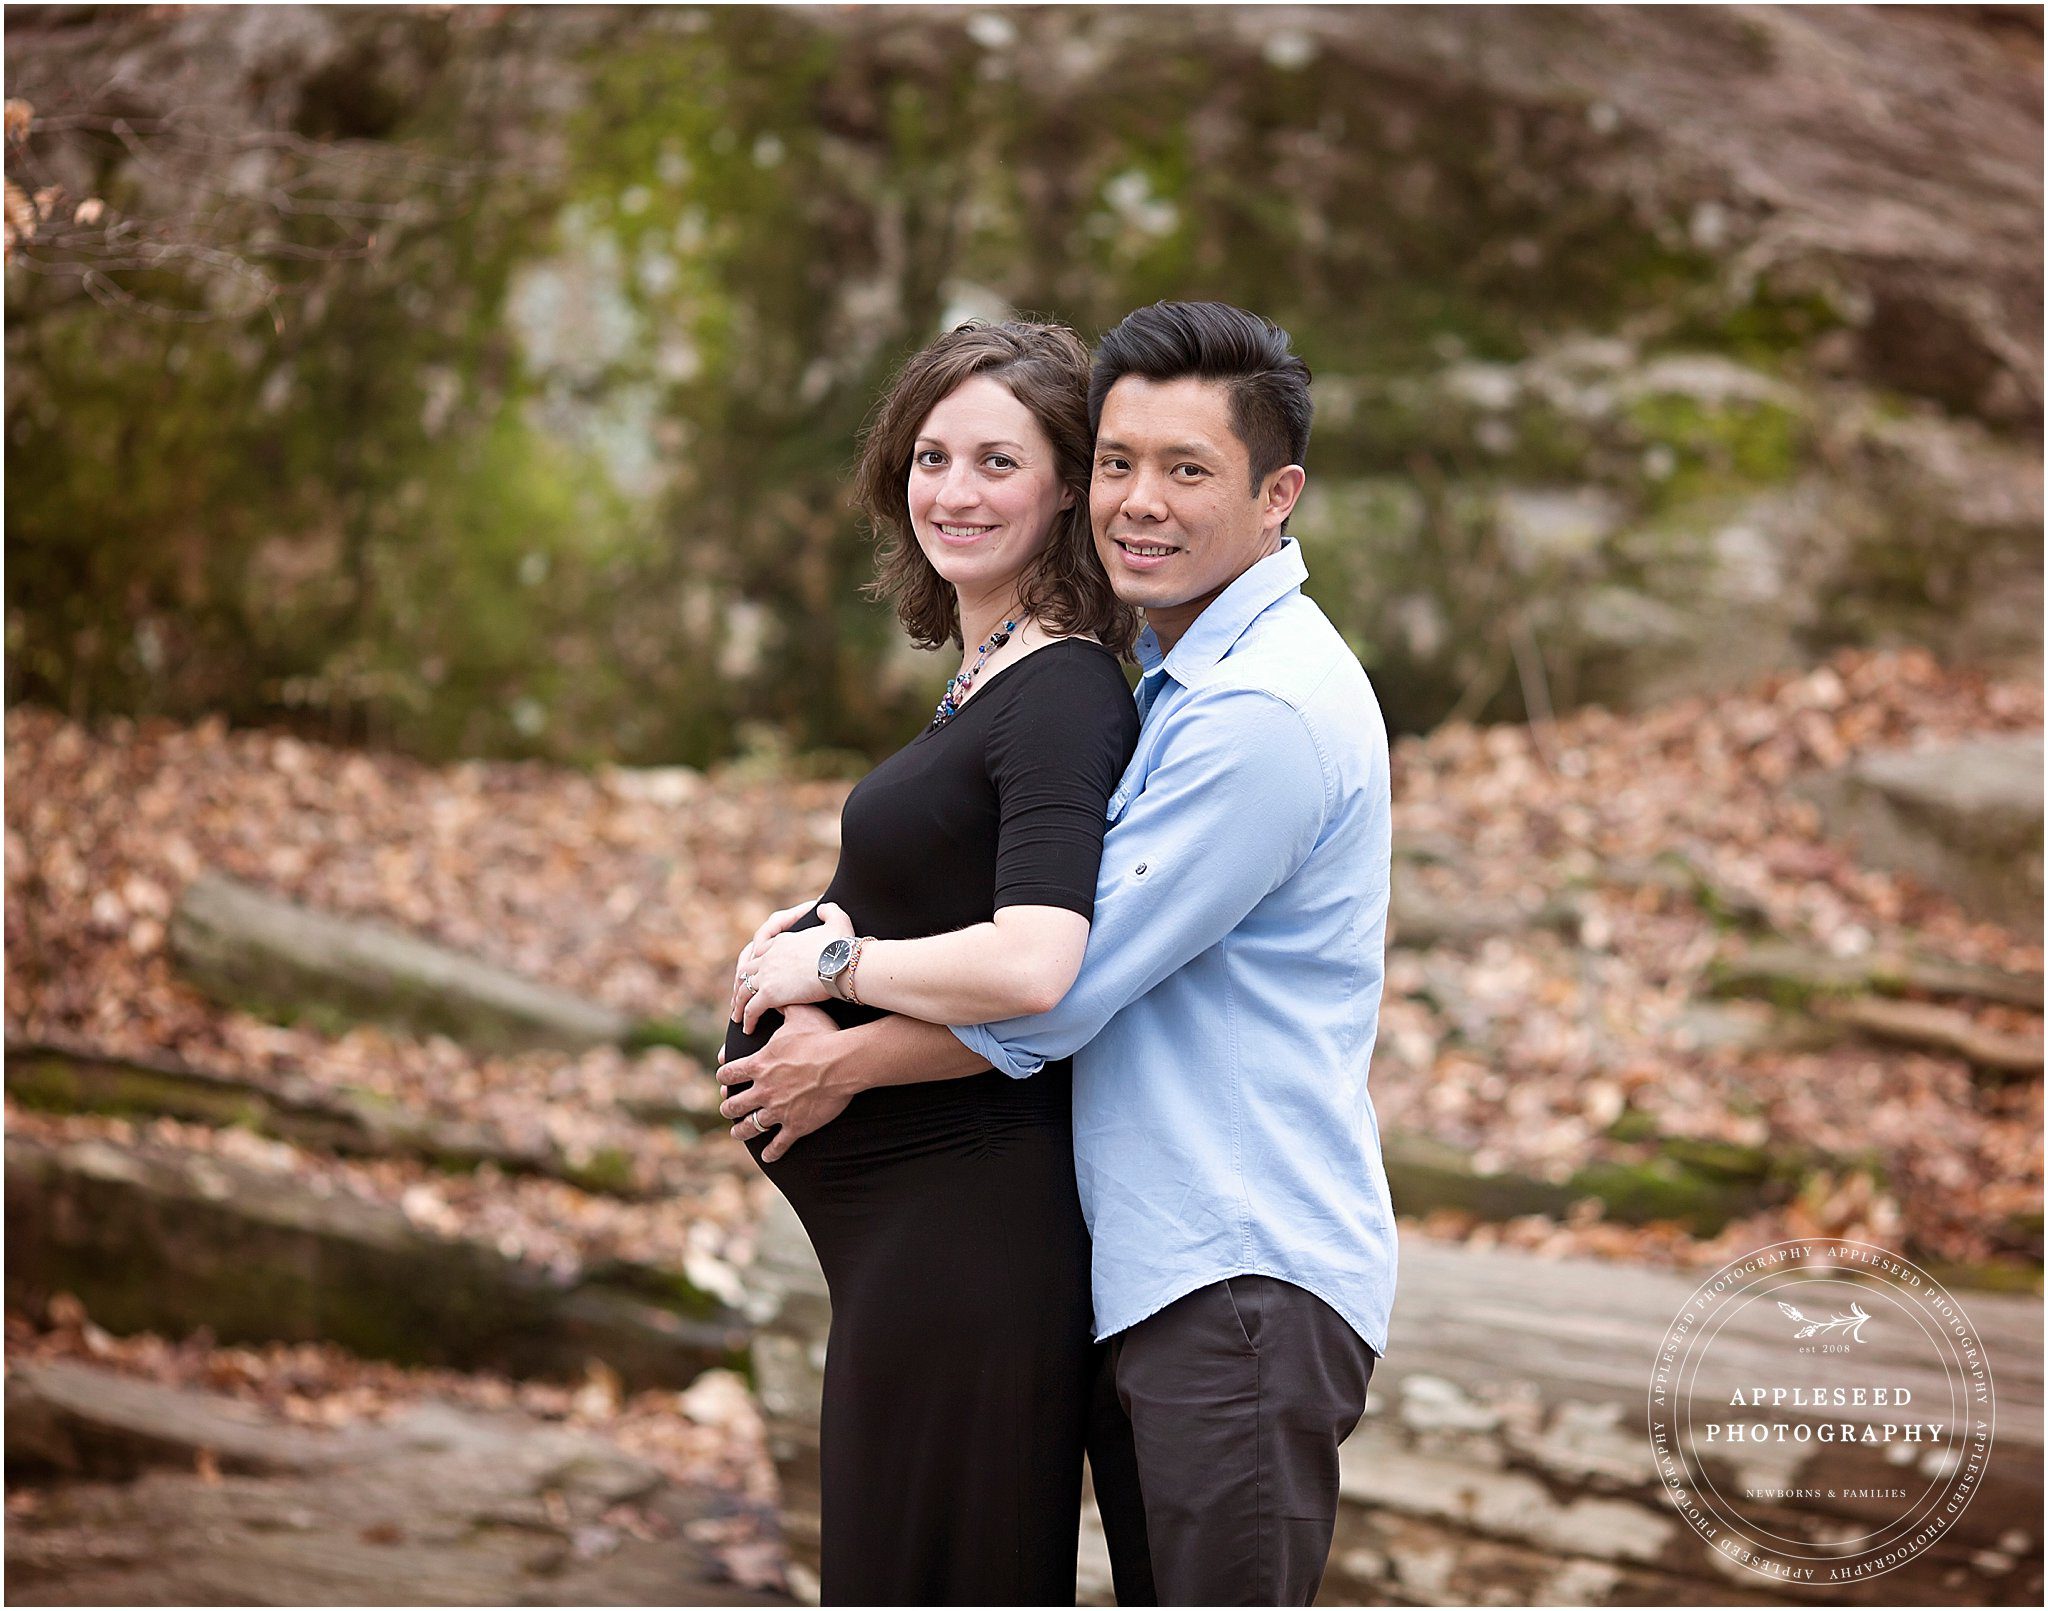 T Family | Atlanta Maternity Photographer | Appleseed Photography